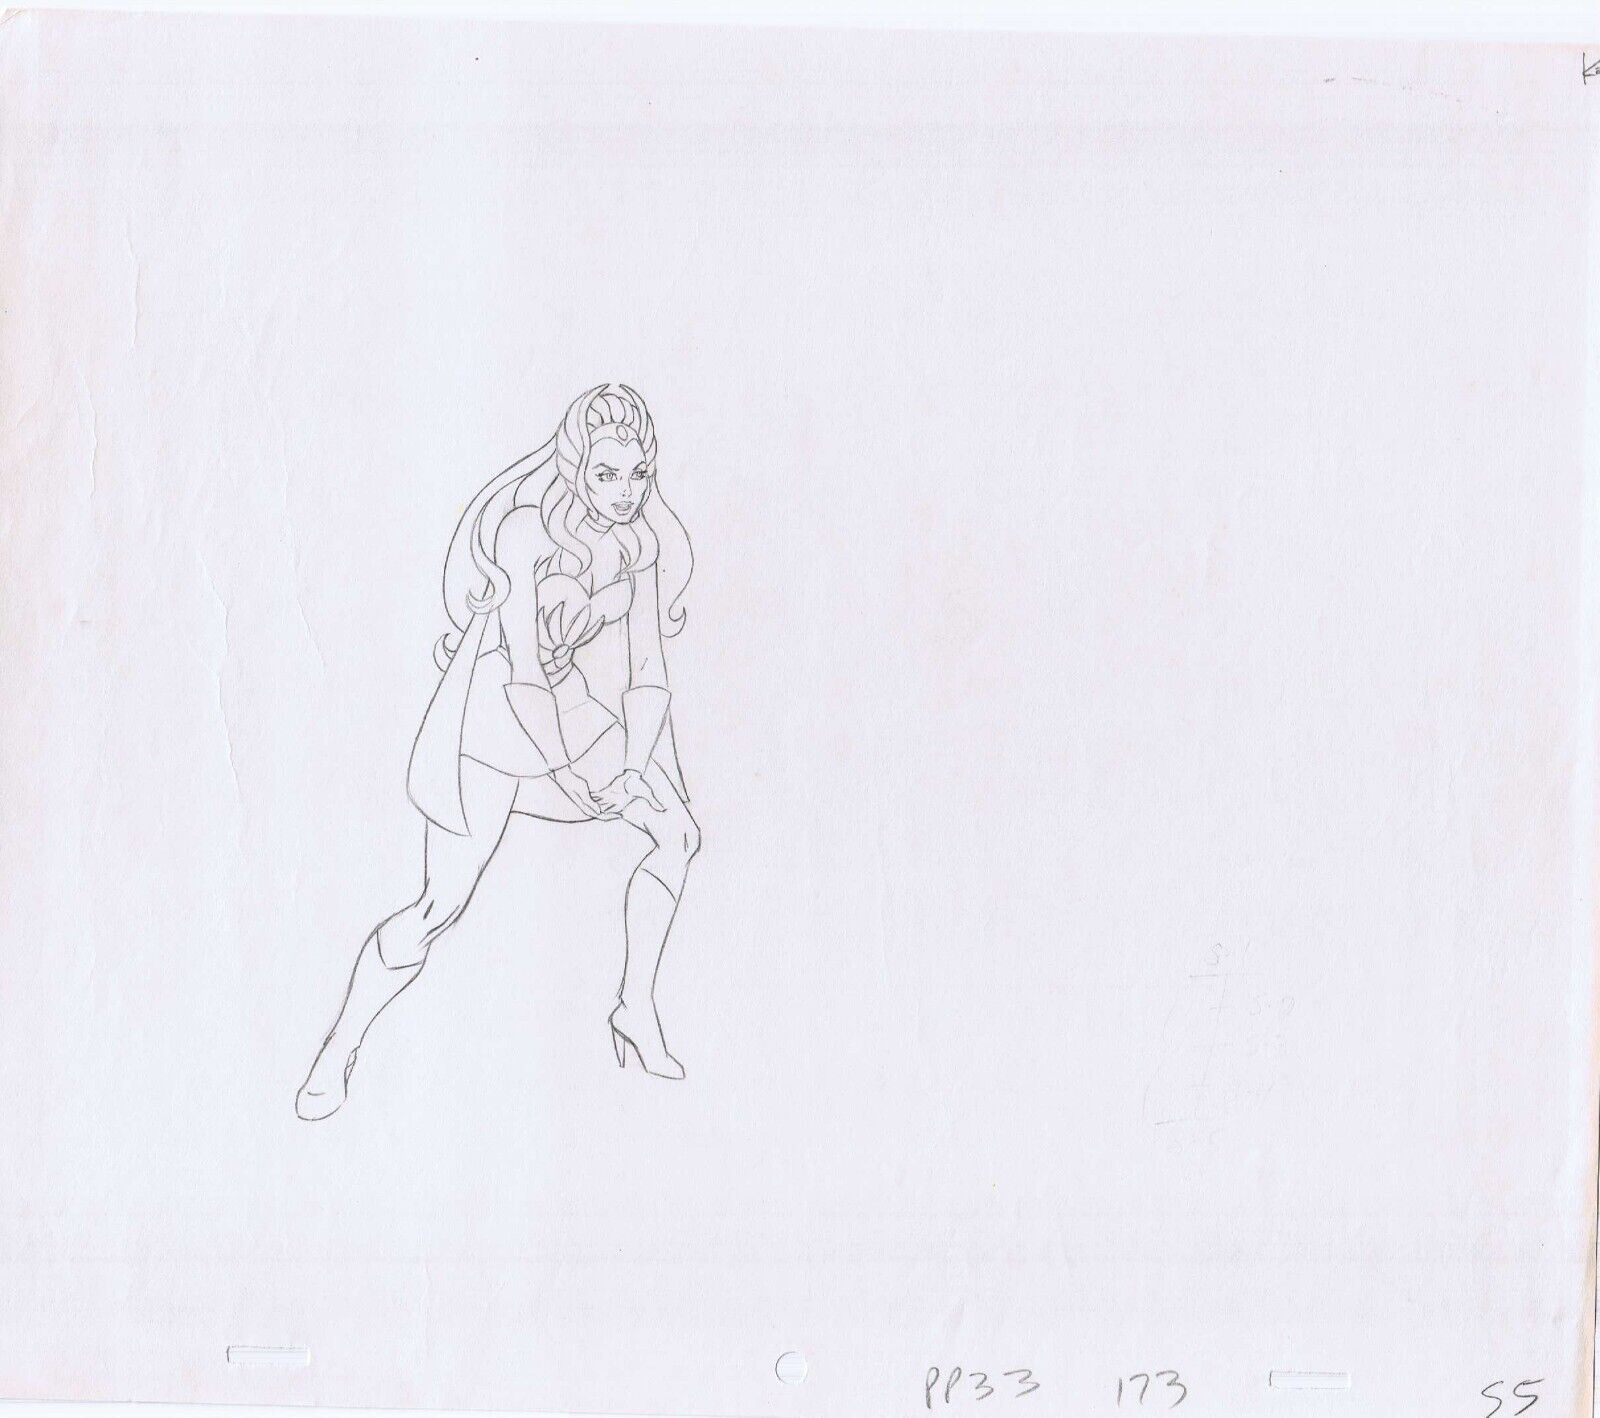 She-Ra 1985 Original Art Animation Production Pencils PP-33 173 55